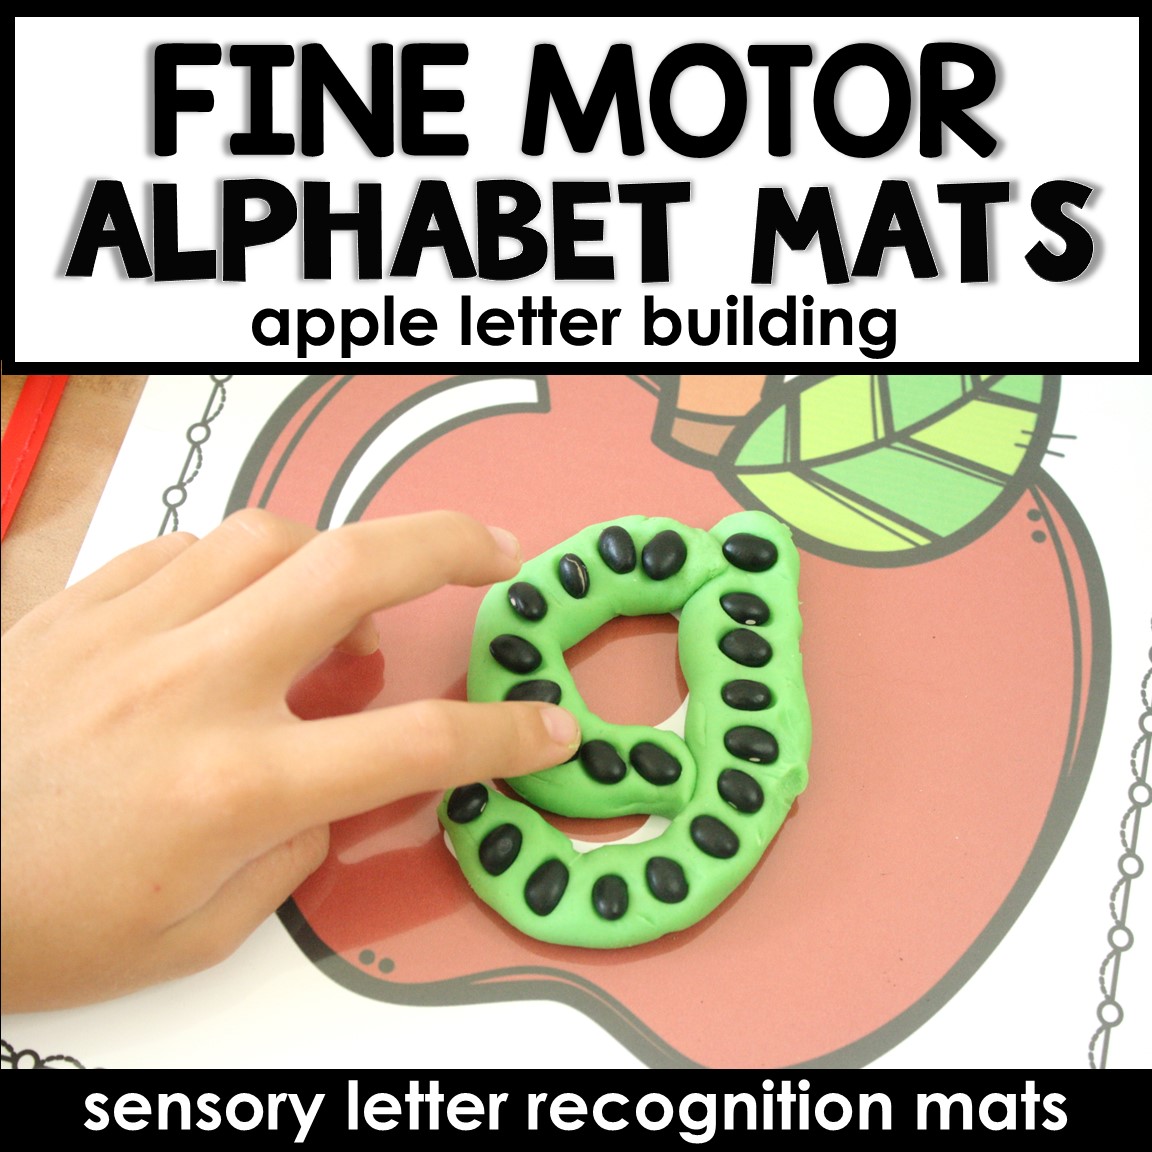 fine motor alphabet mats apple letter building product cover